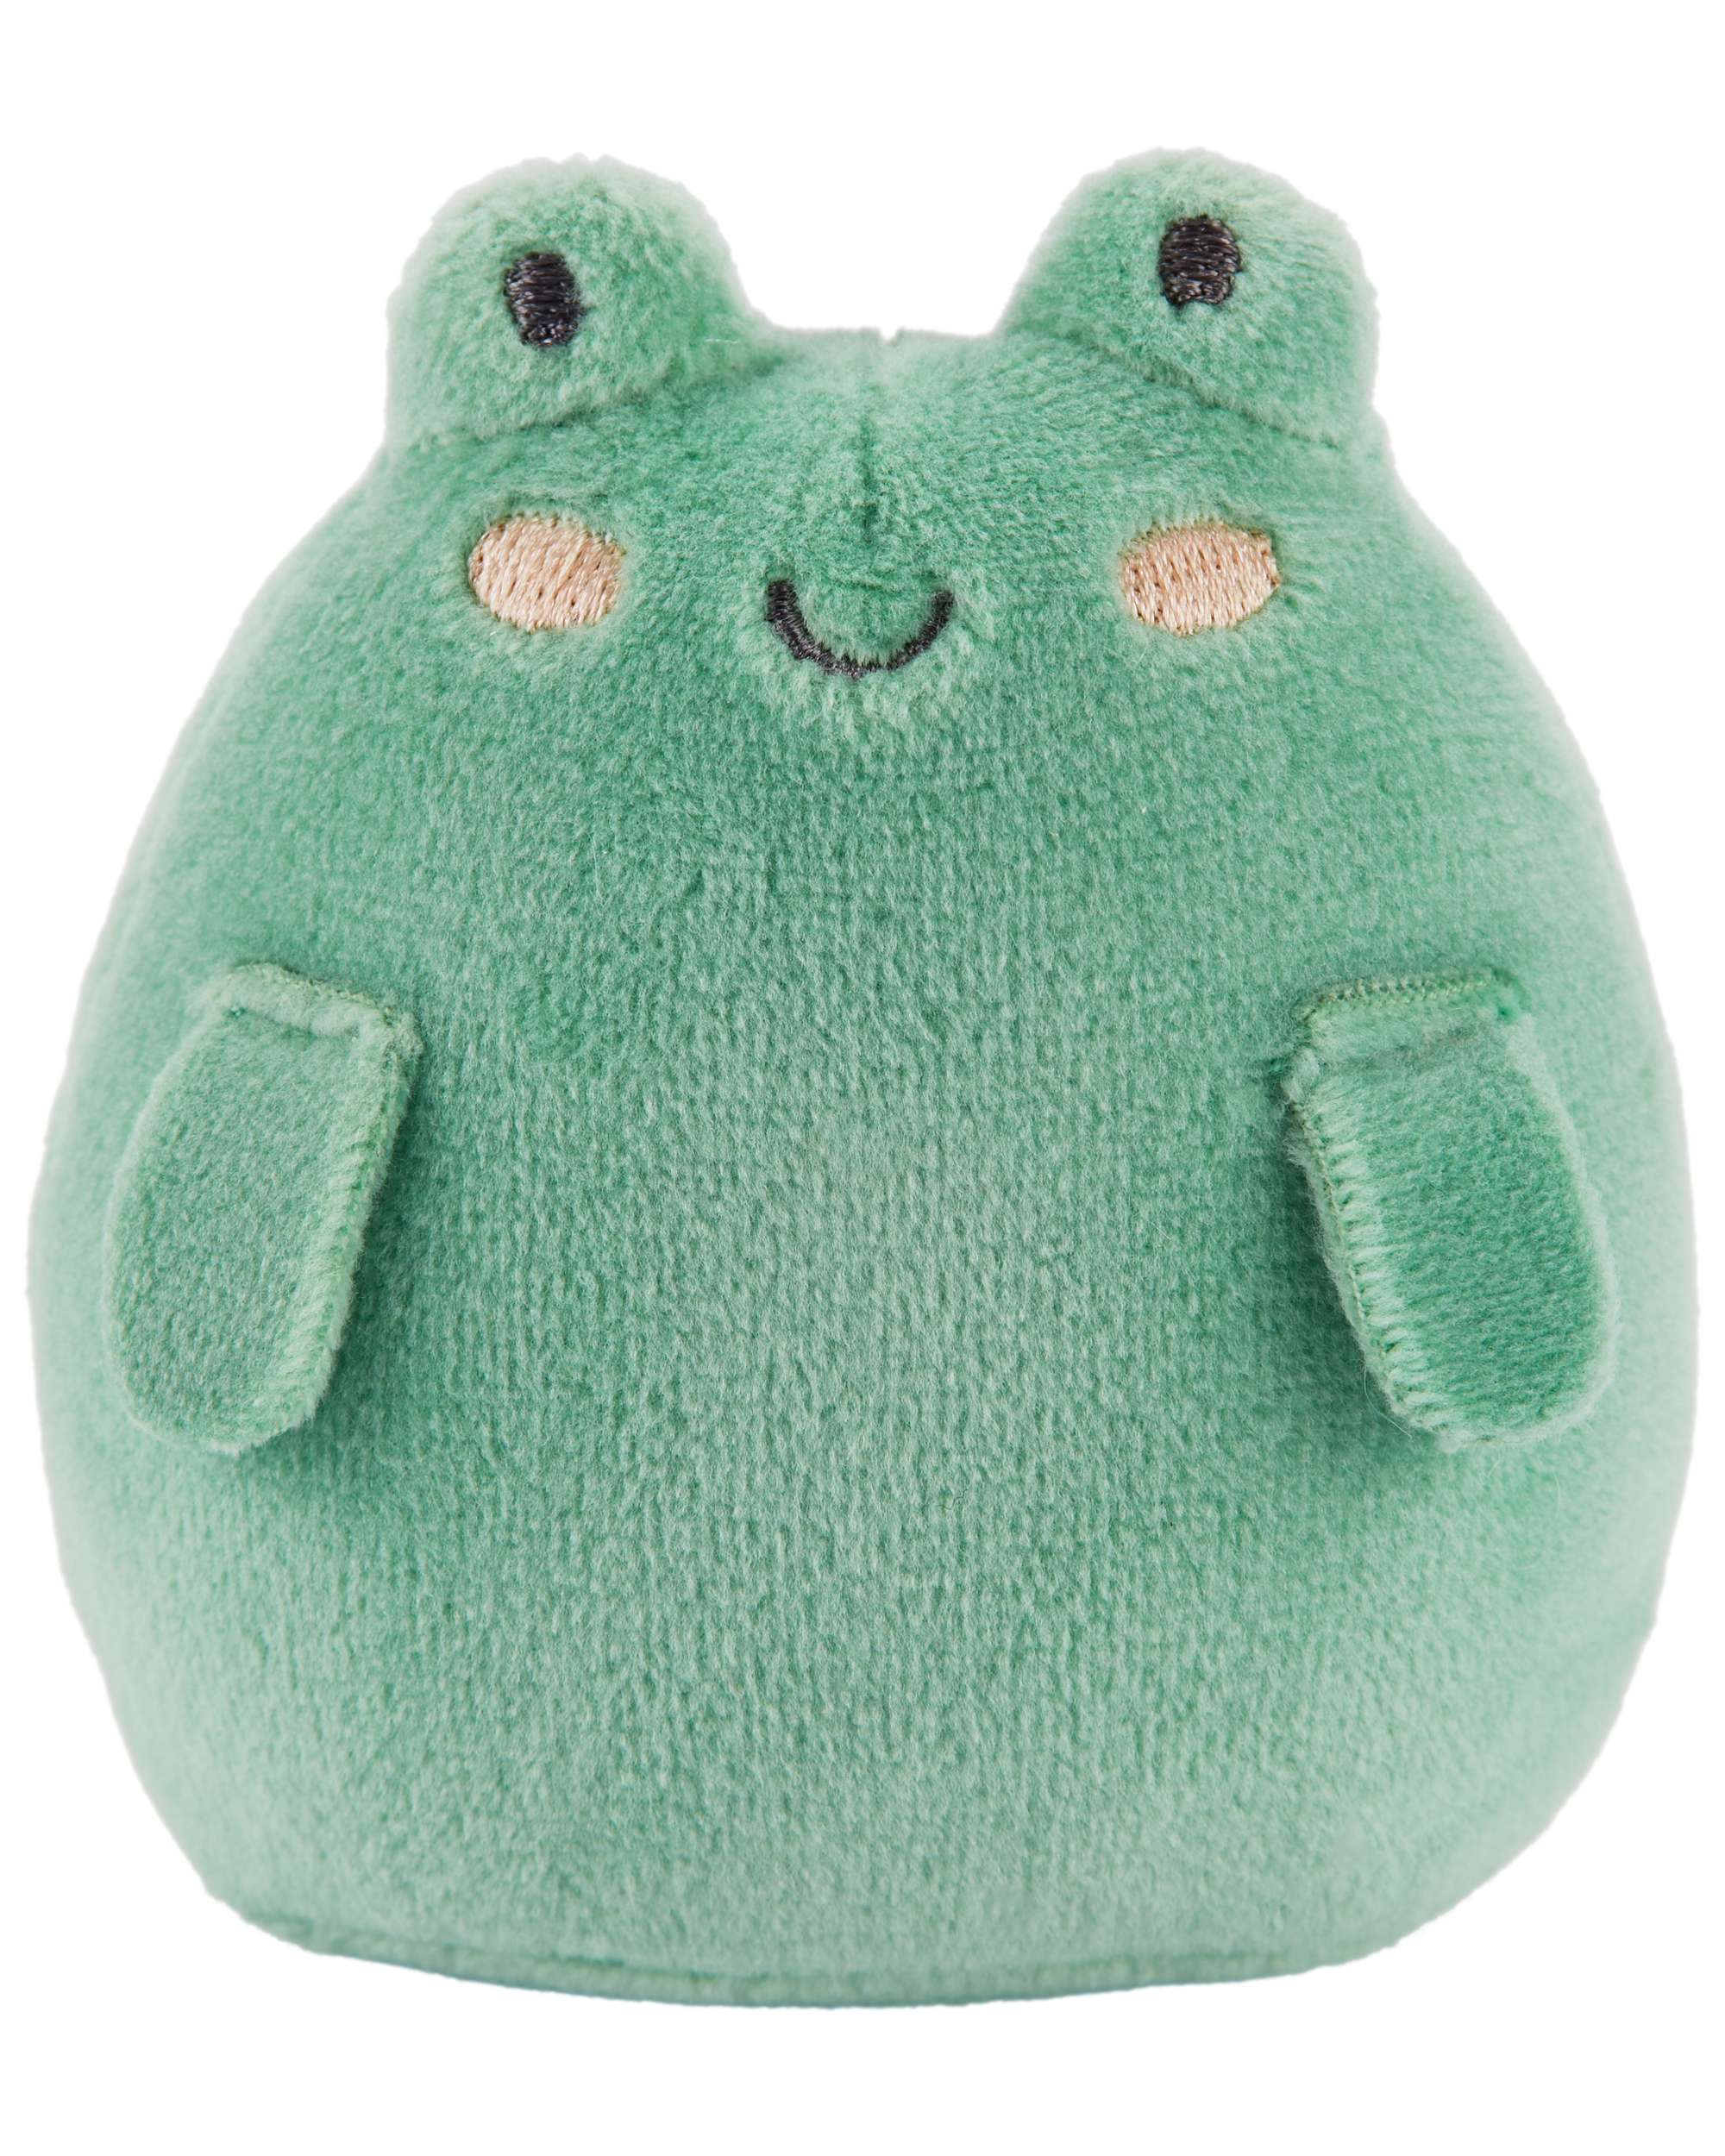 Toddler Frog Tiny Plush